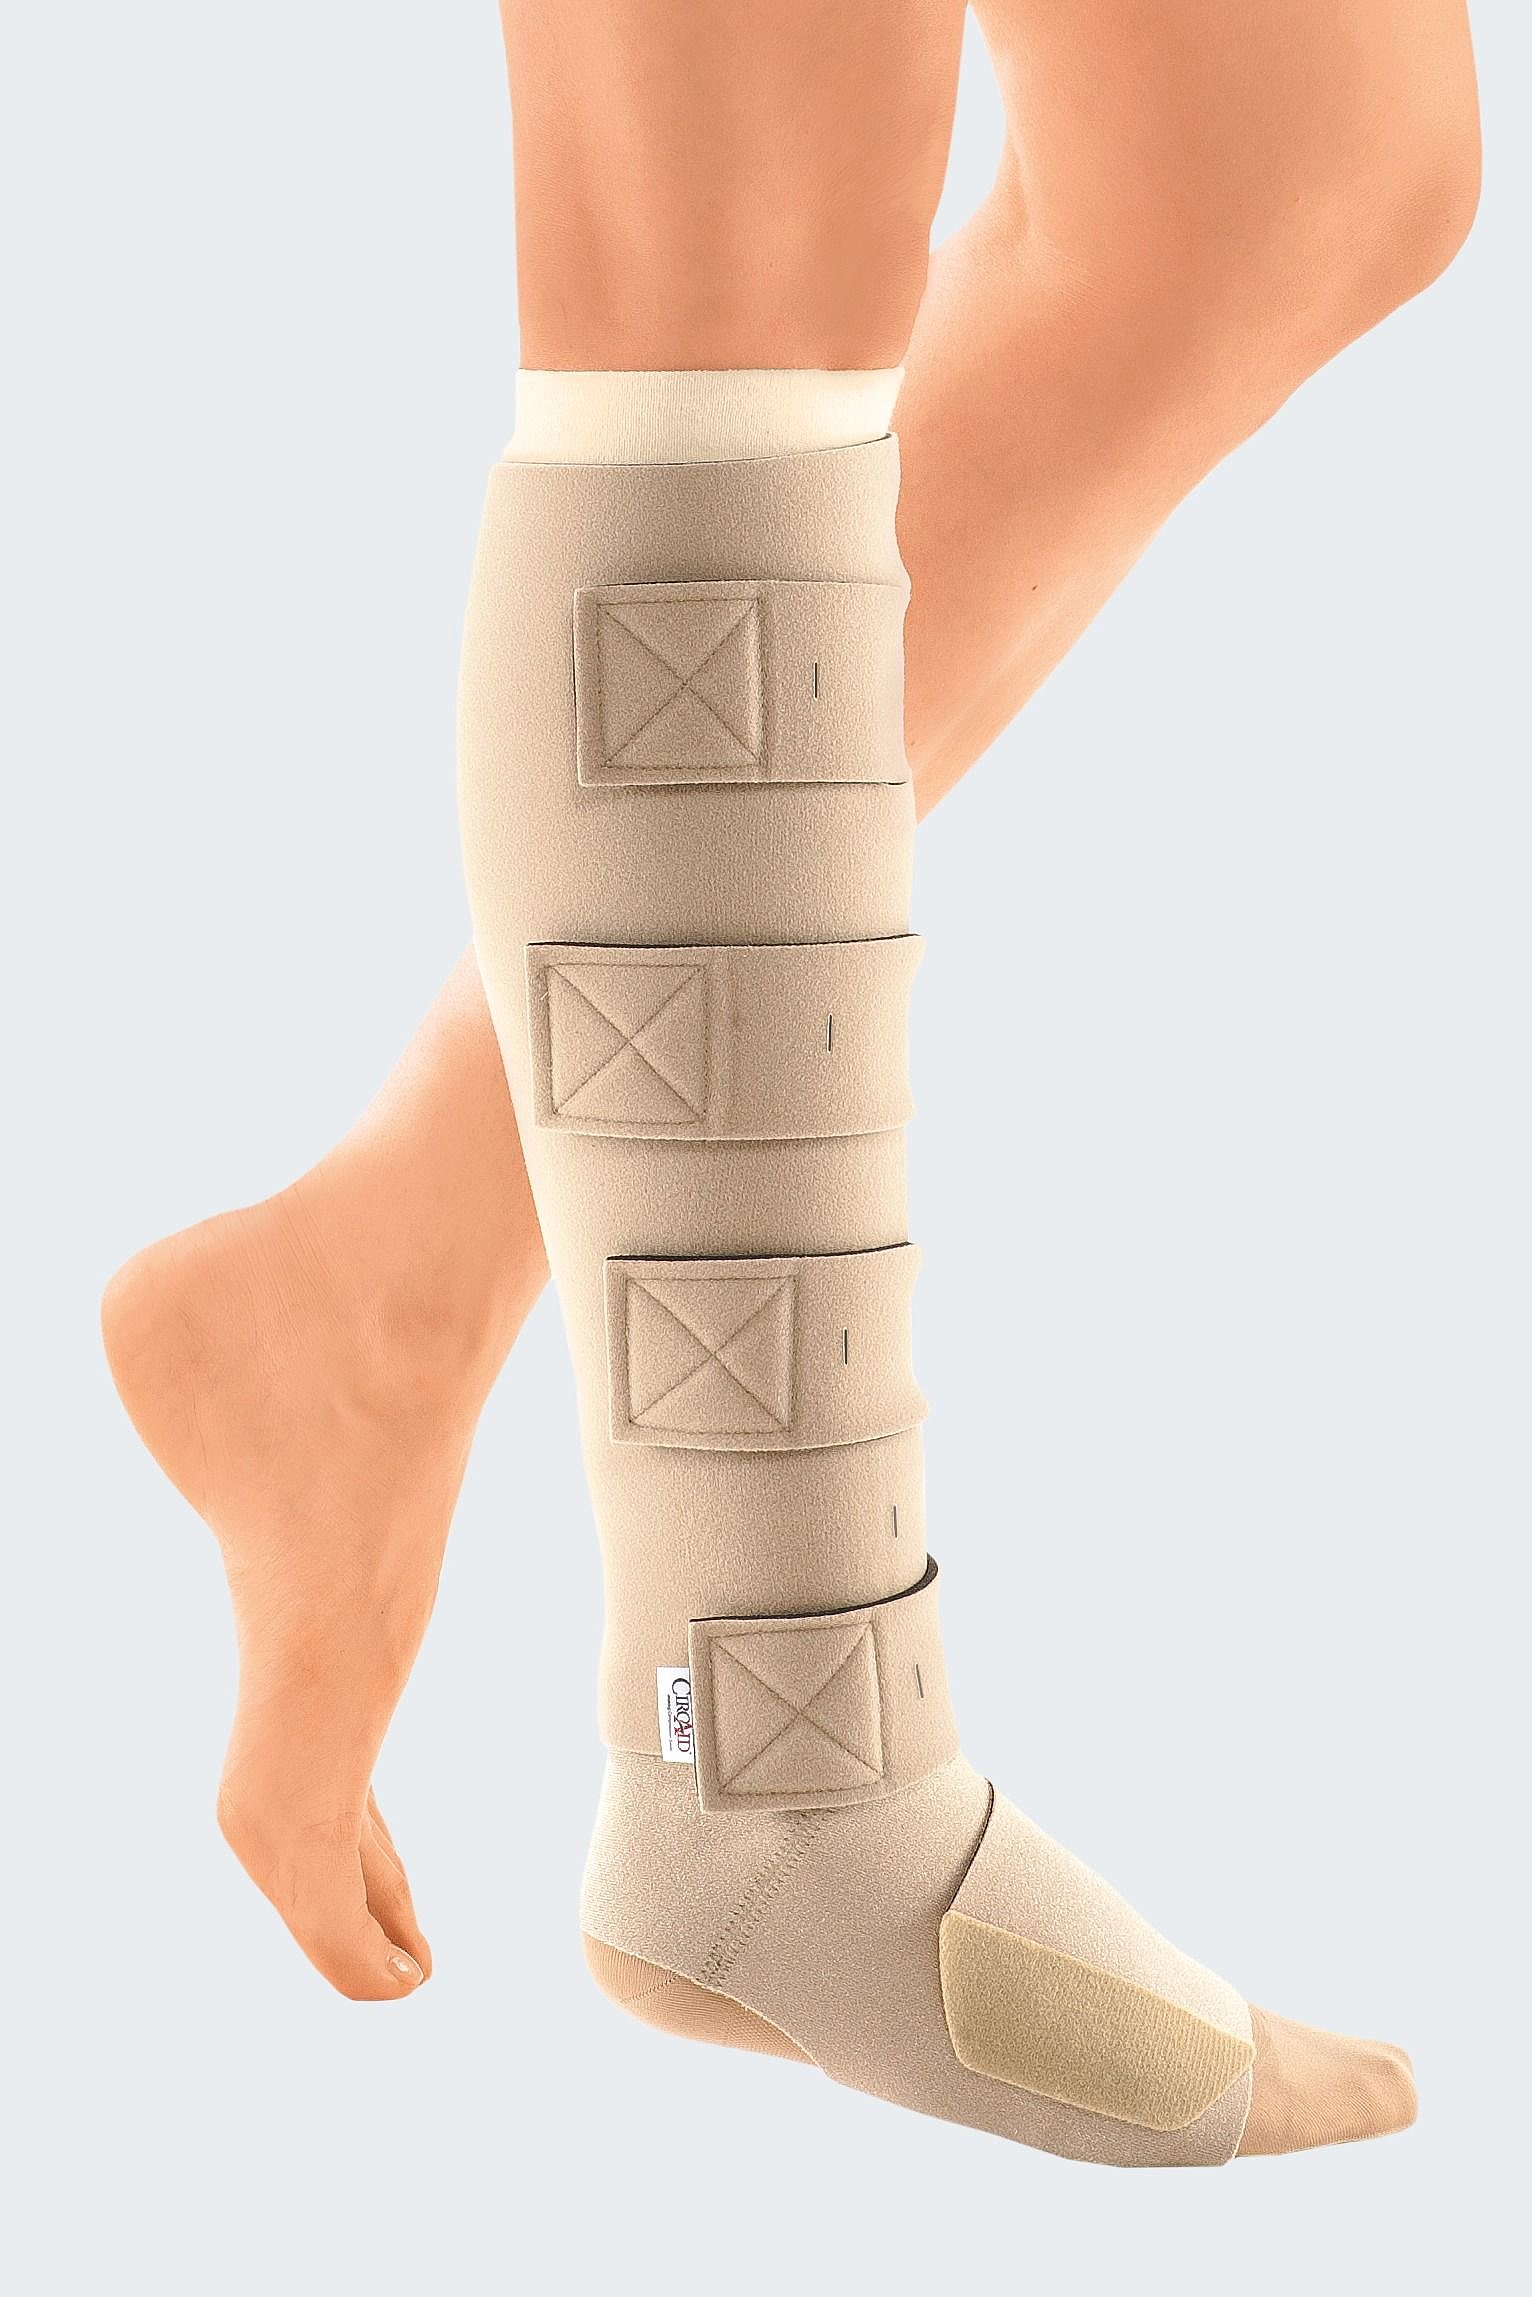 leg compression garment